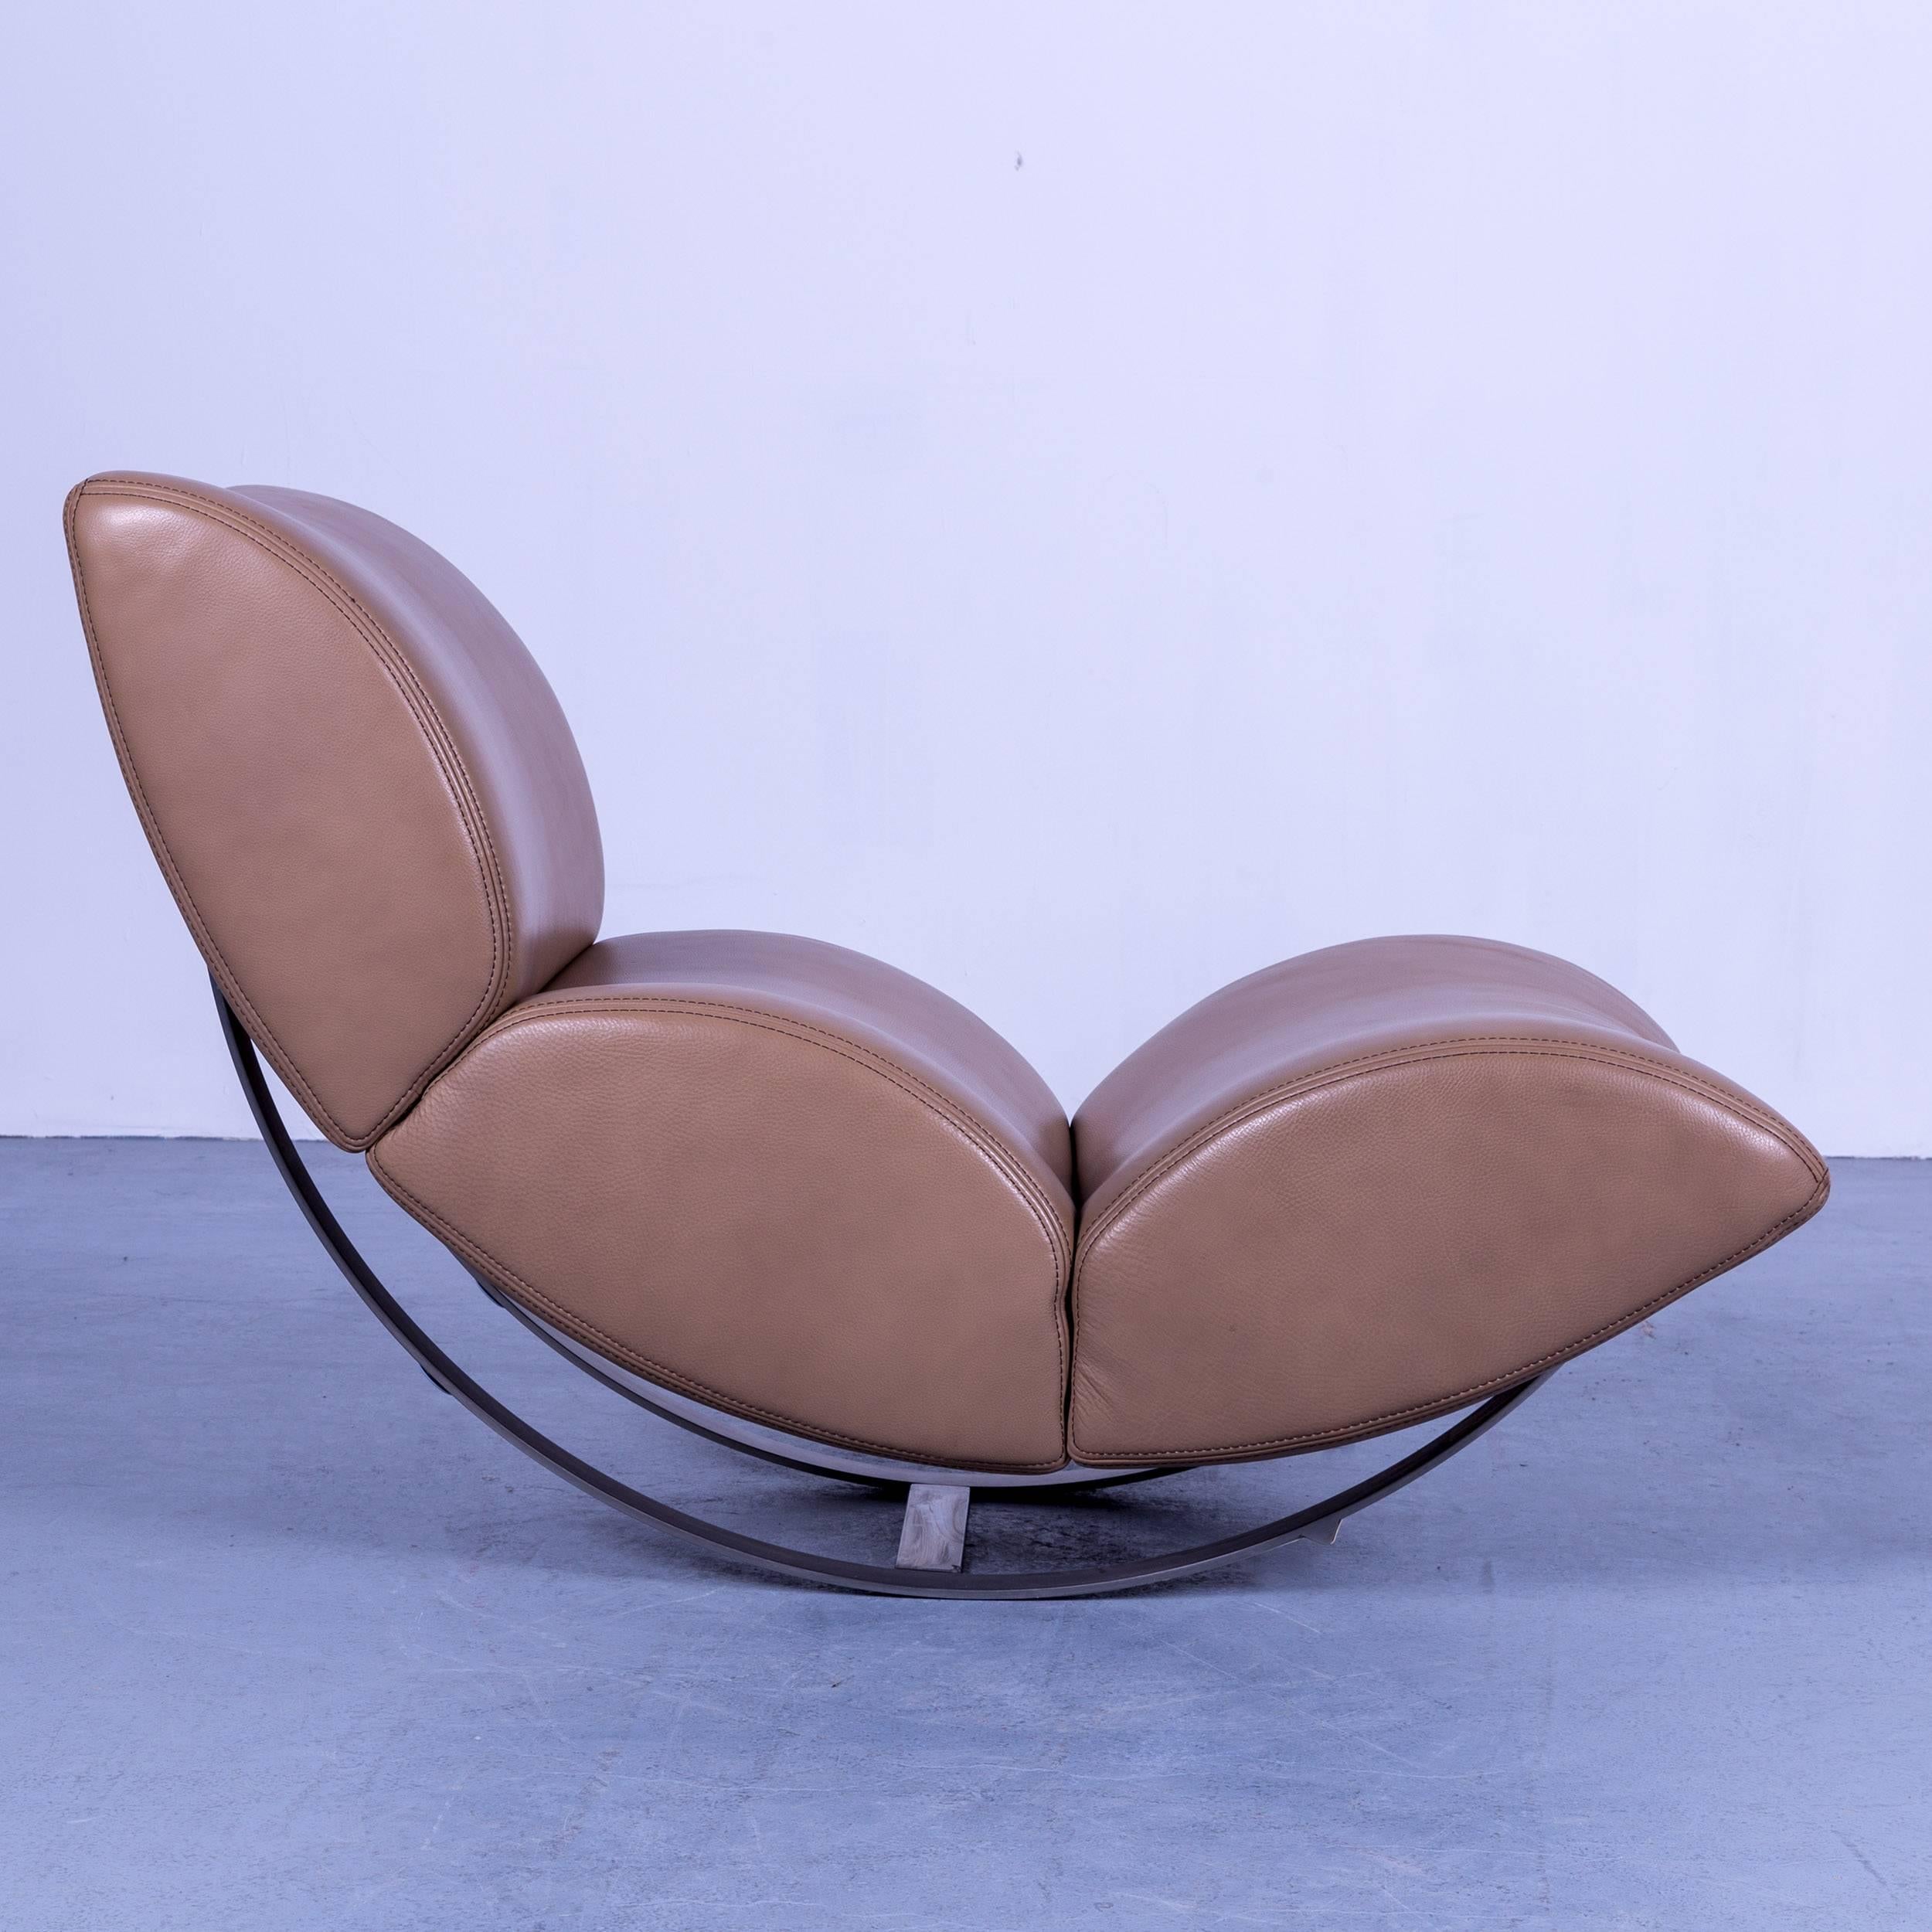 Koinor Jetlag Designer Rocking Chair Beige Crème Leather One-Seat Metal Frame 3